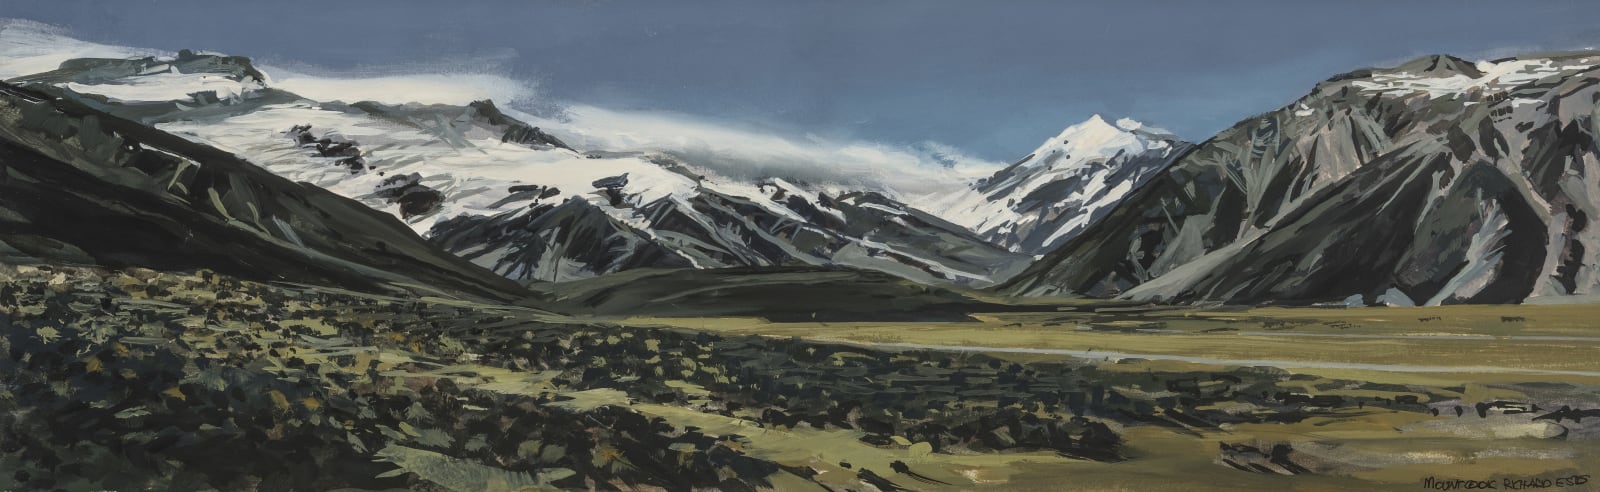 Richard Estes, Mount Cook (New Zealand), 2010